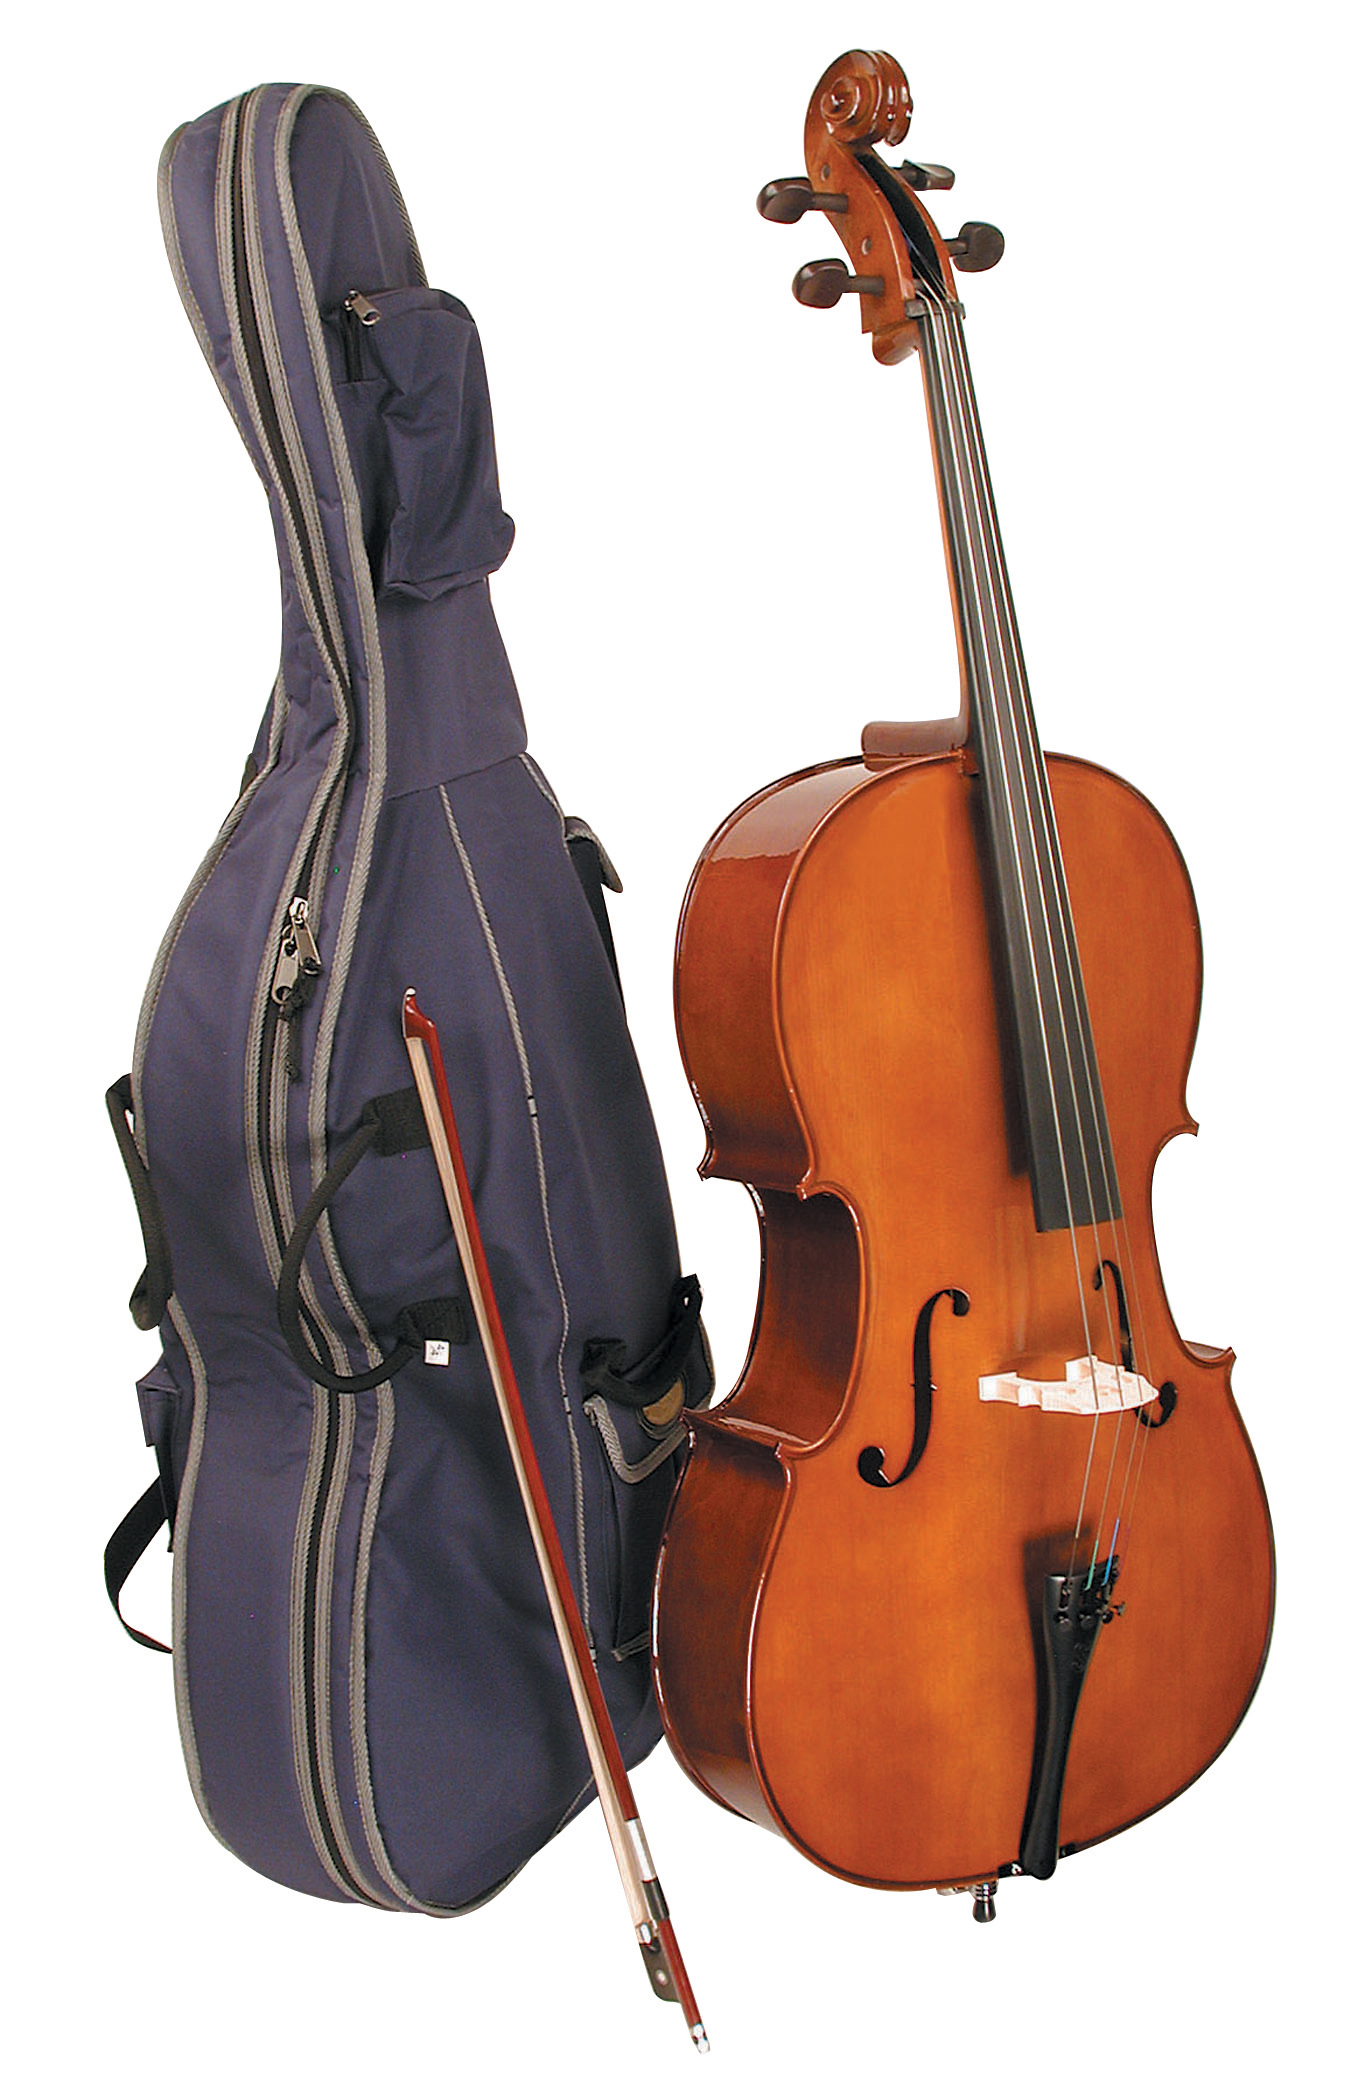 Stentor 1102A2-4/4 Cello Length 29.5 4/4 - image 1 of 1